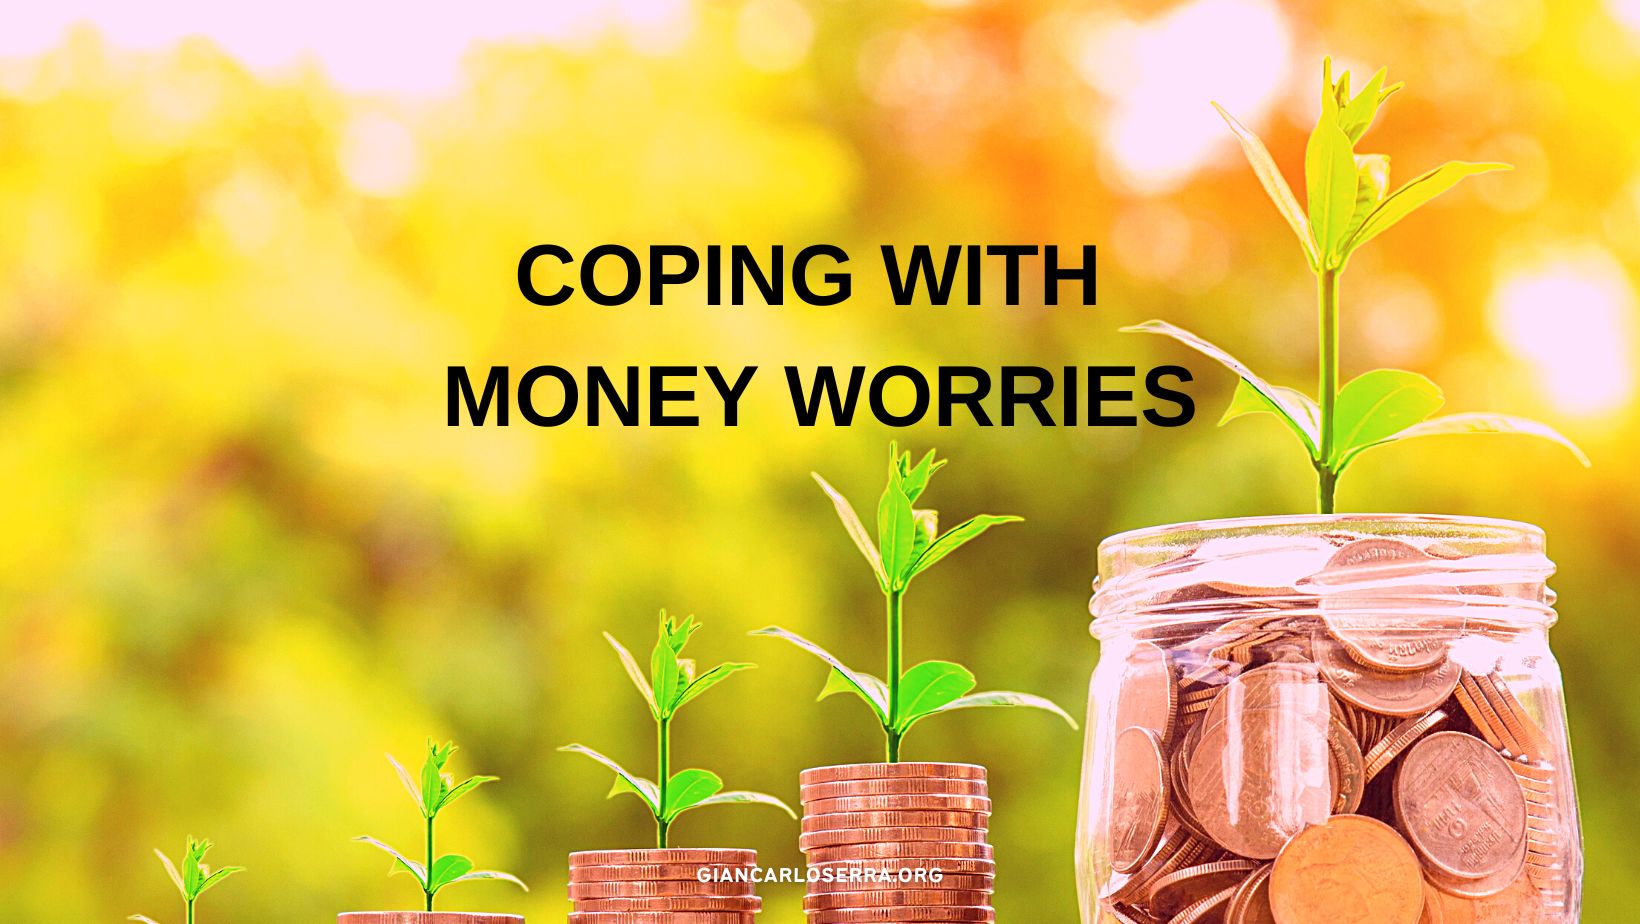 coping with money worries